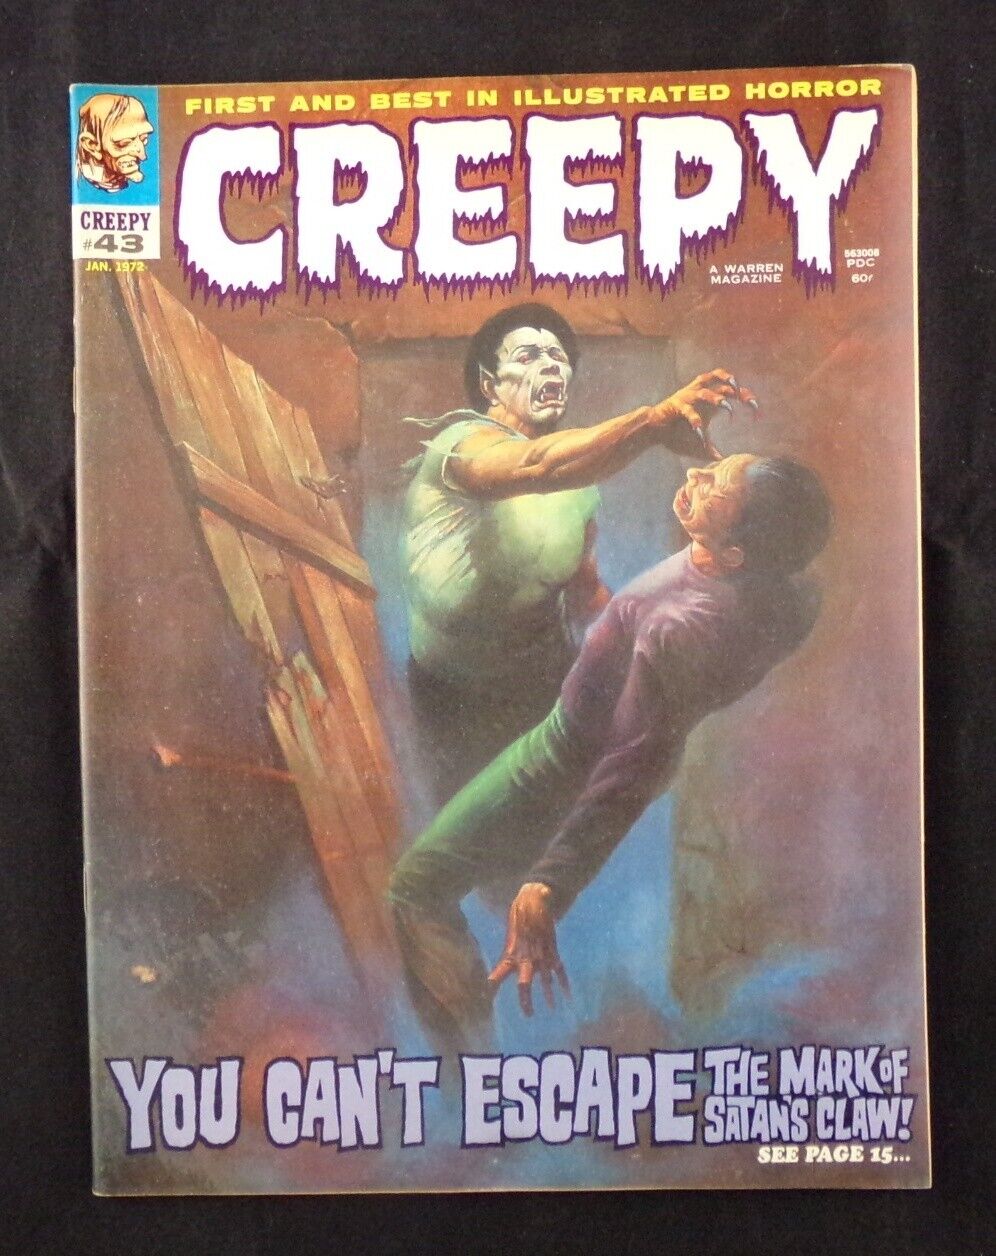 CREEPY MAGAZINE #43 JAN 1972 NM- 9.2 WARREN PUBLISHING KEN KELLY COVER